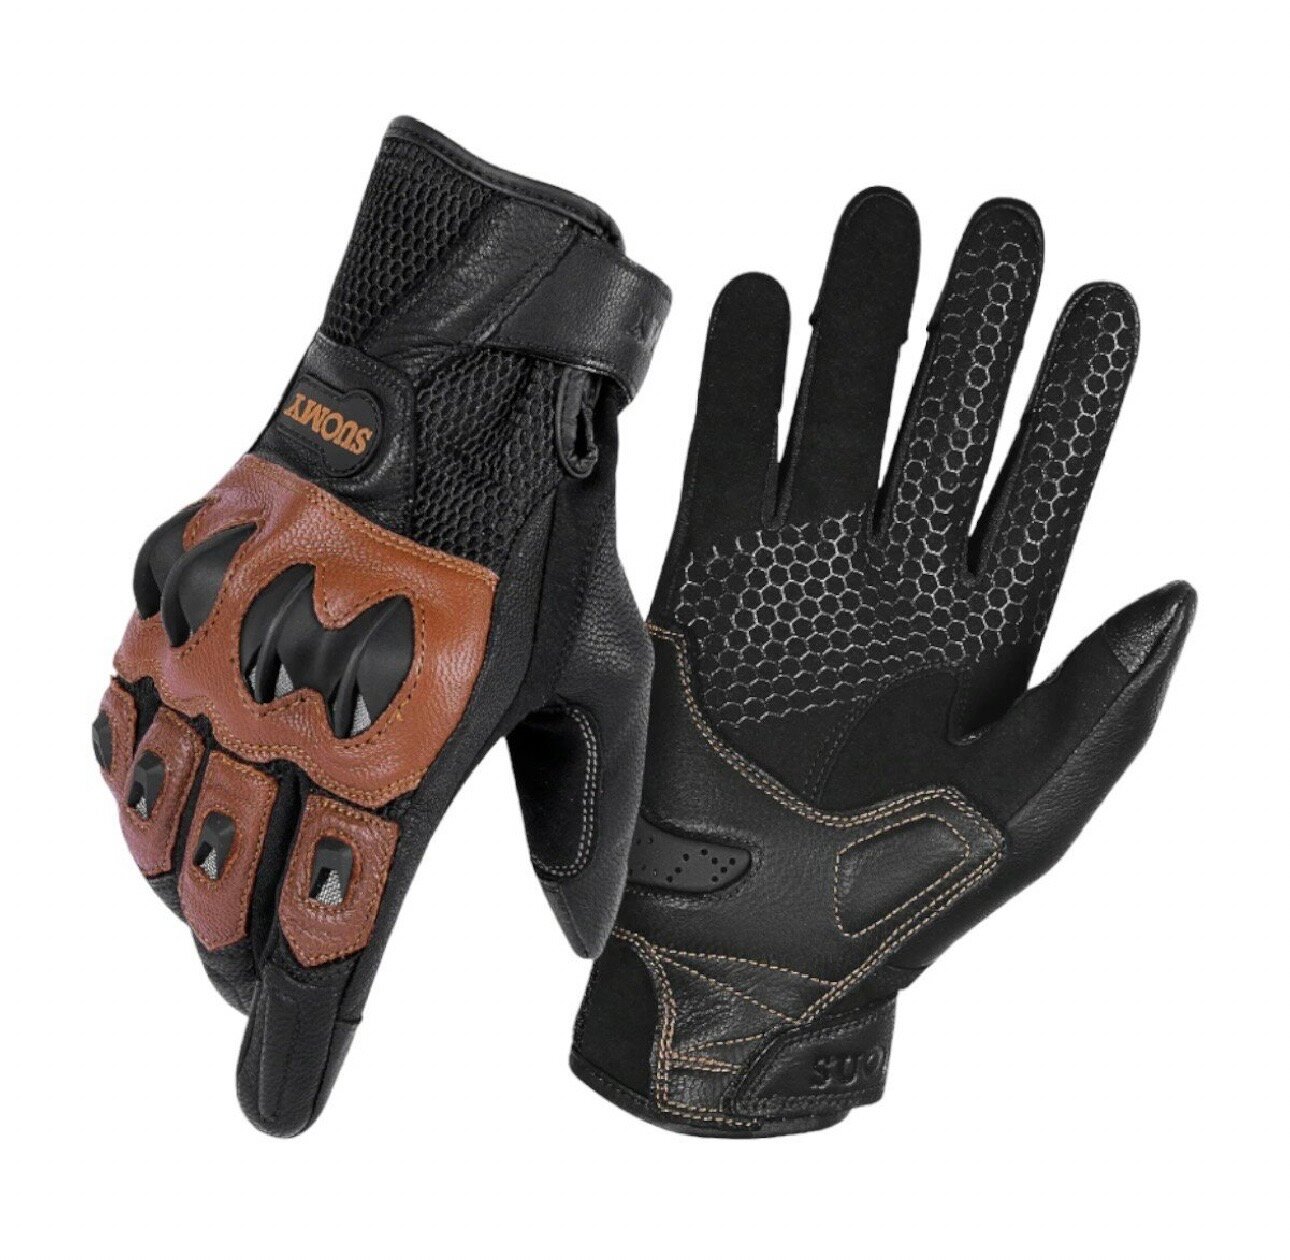 Мотоперчатки перчатки кожаные Suomy SU-15 для мотоциклиста на мотоцикл скутер мопед квадроцикл, черно-коричневые, XXL